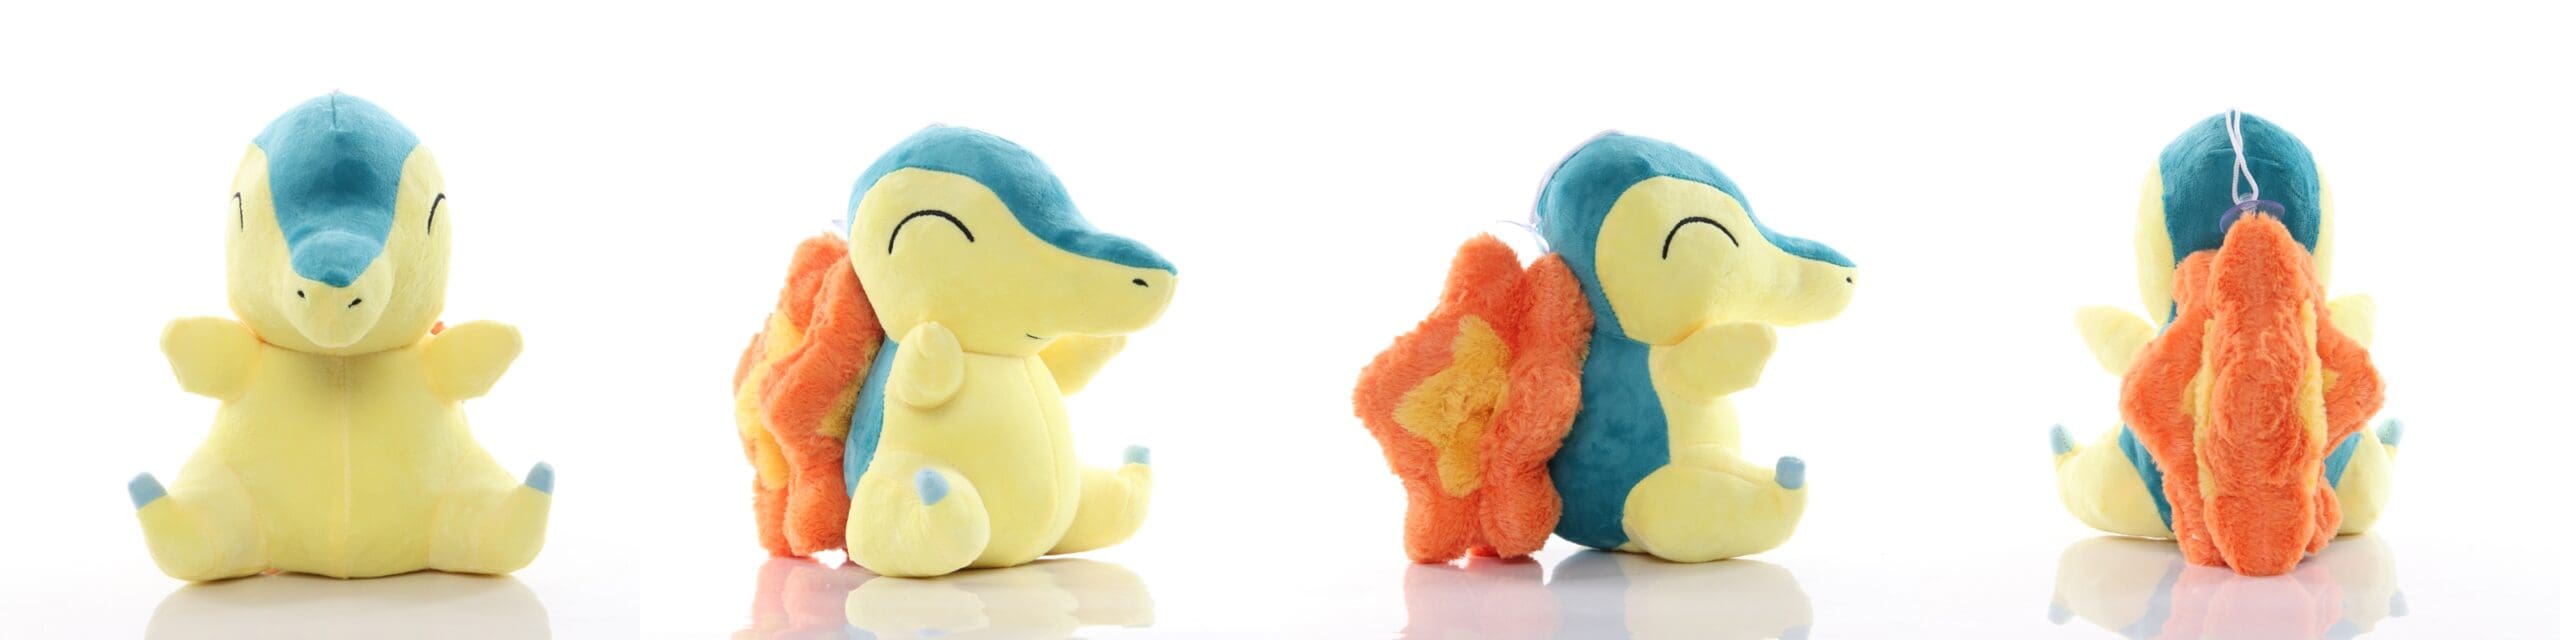 TAKARA TOMY Pokemon Animal Stuffed Plush Toy